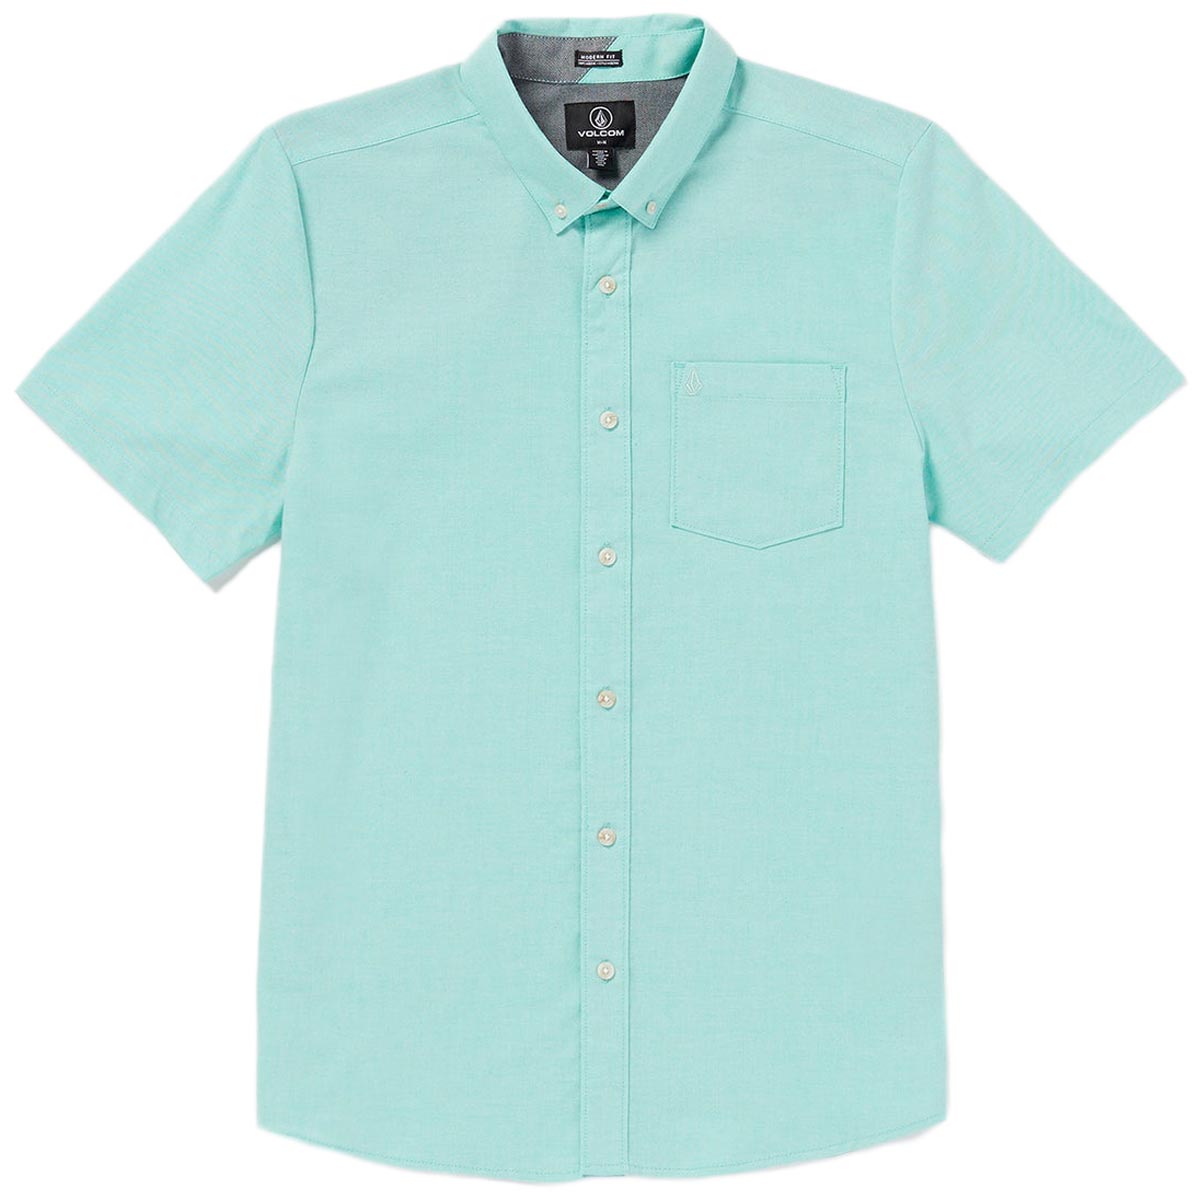 Volcom Everett Oxford Shirt - Dusty Aqua image 1